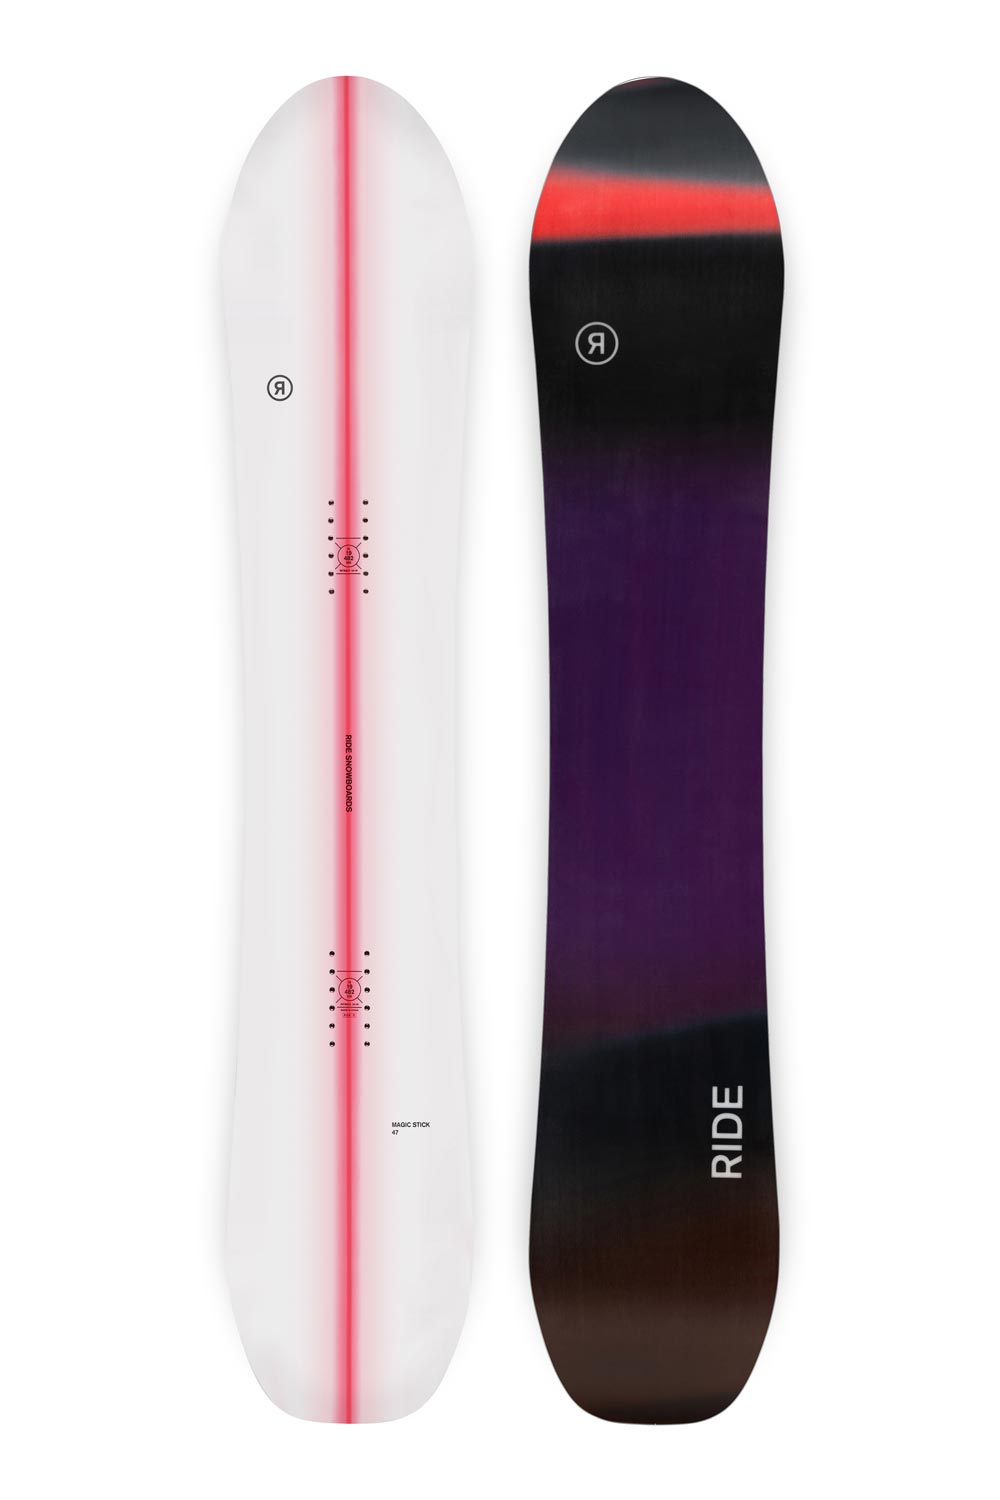 Ride Magic Stick snowboard, women's, white with red stripe